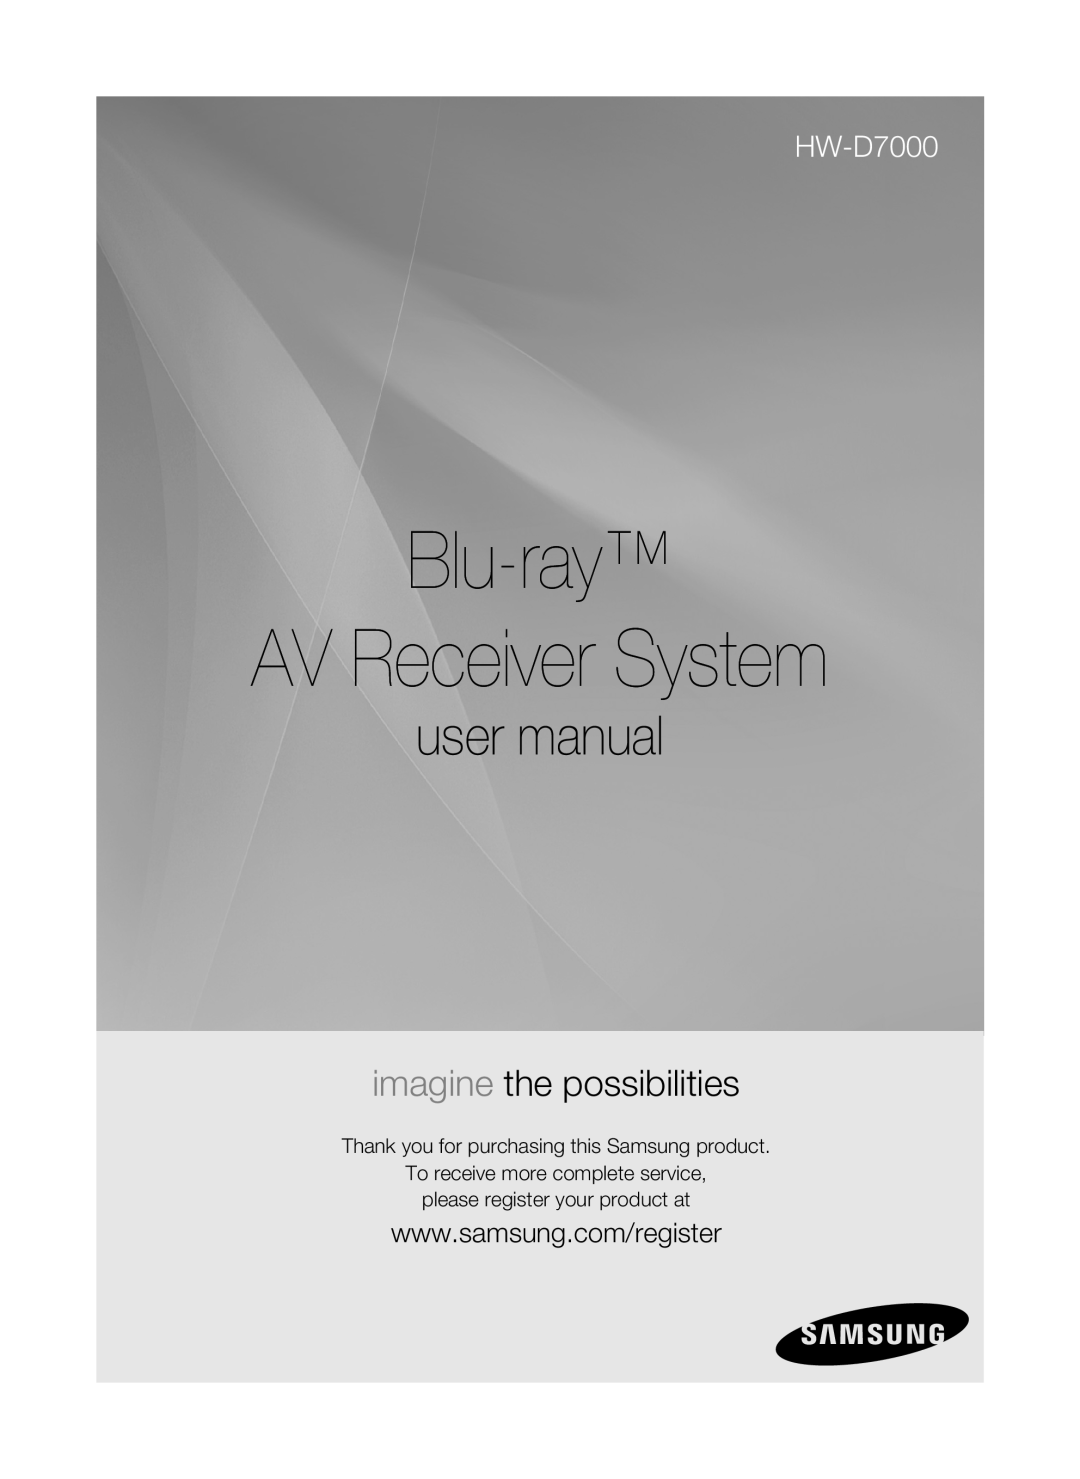 Samsung HW-D7000 user manual Blu-ray AV Receiver System, imagine the possibilities 